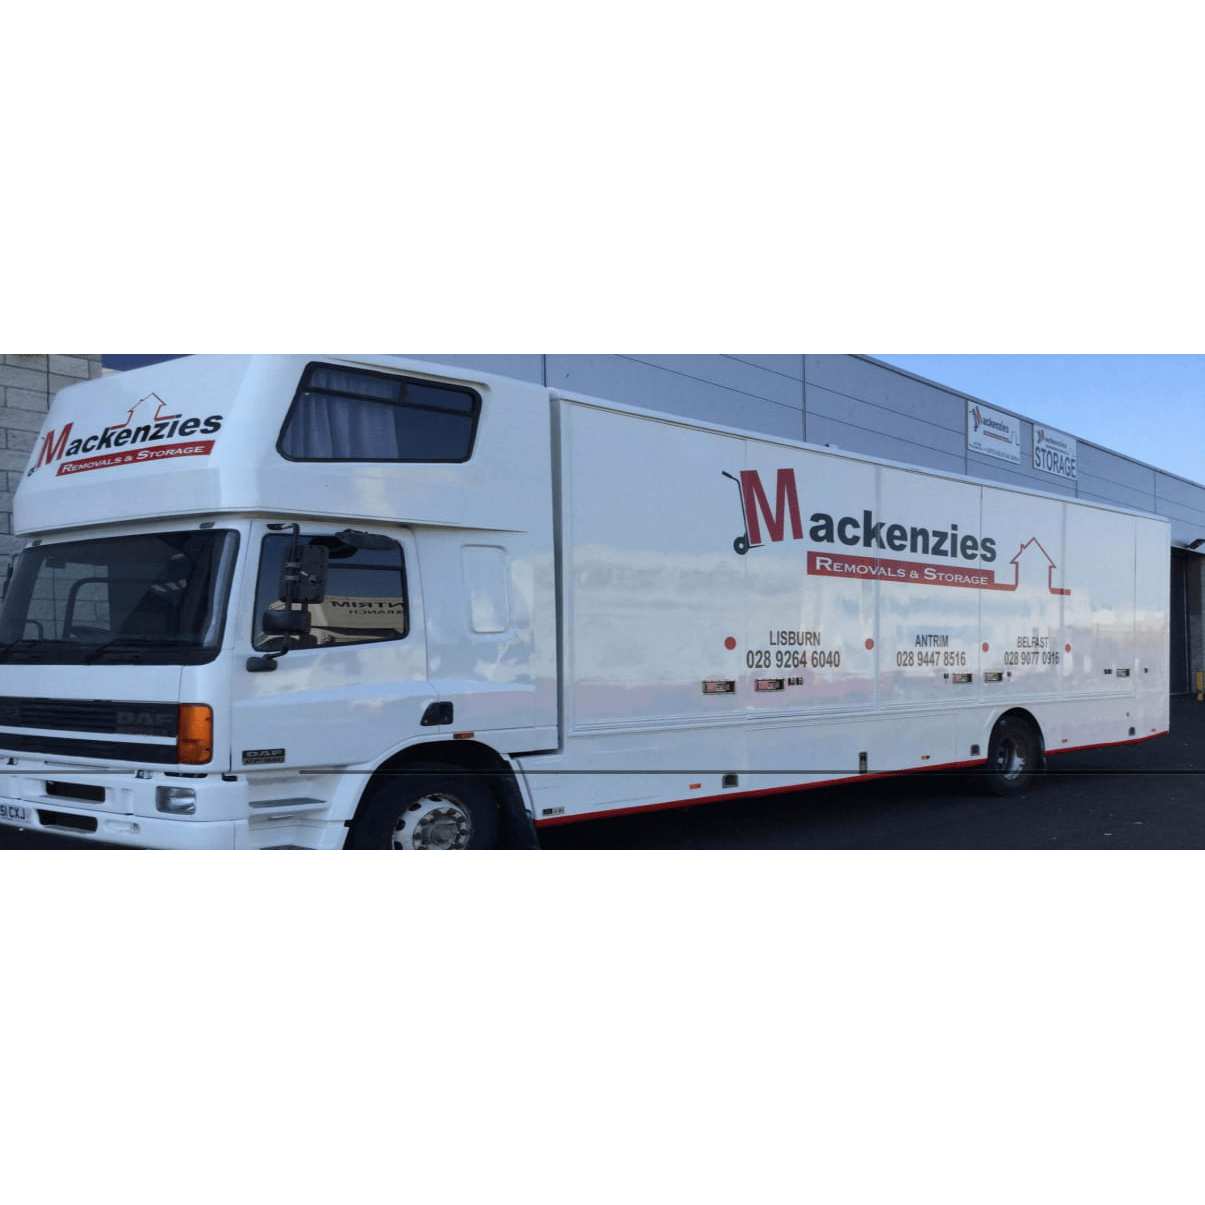 Mackenzie Removals & Storage Ltd Logo